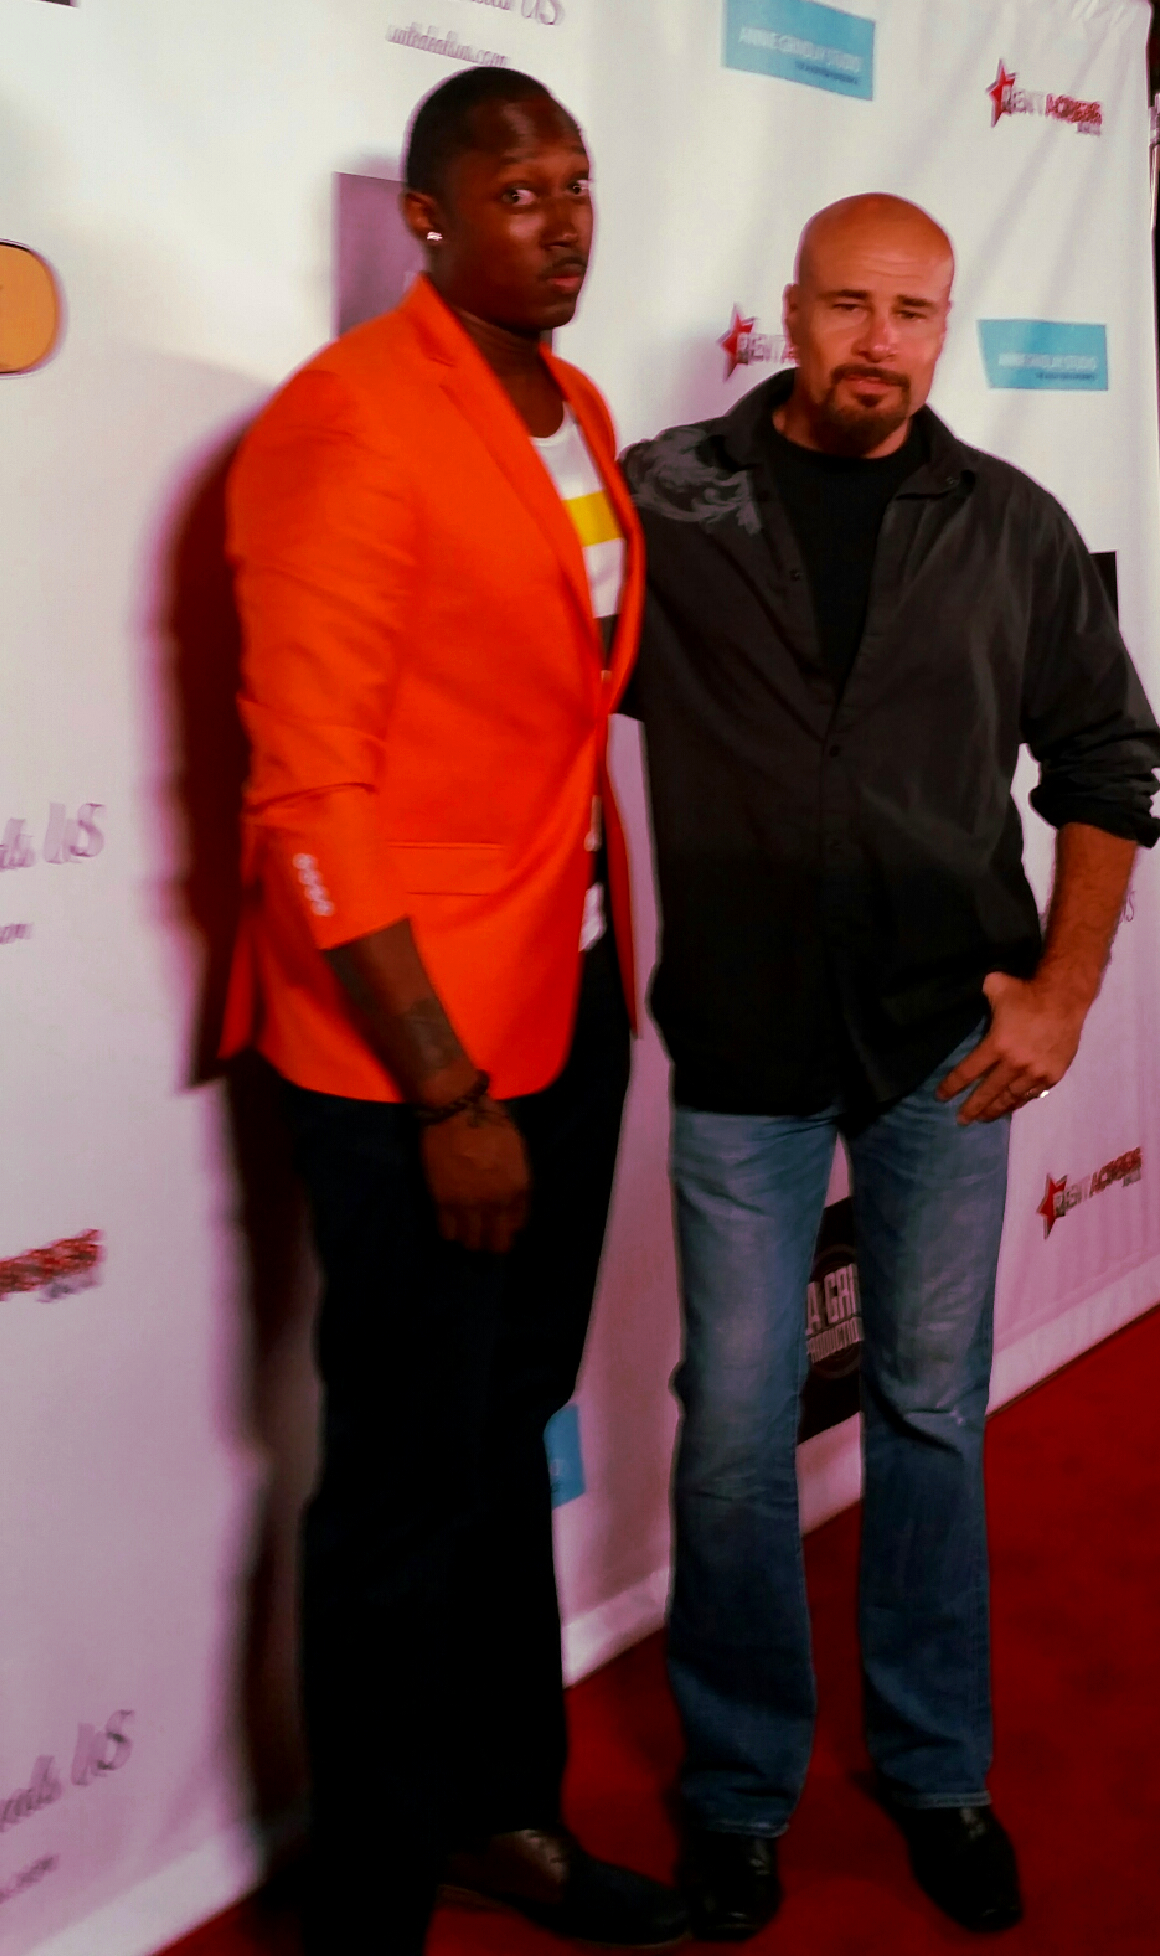 Sauvion & Evan Mack on the Red Carpet Event Studio City, CA. Aug. 2014